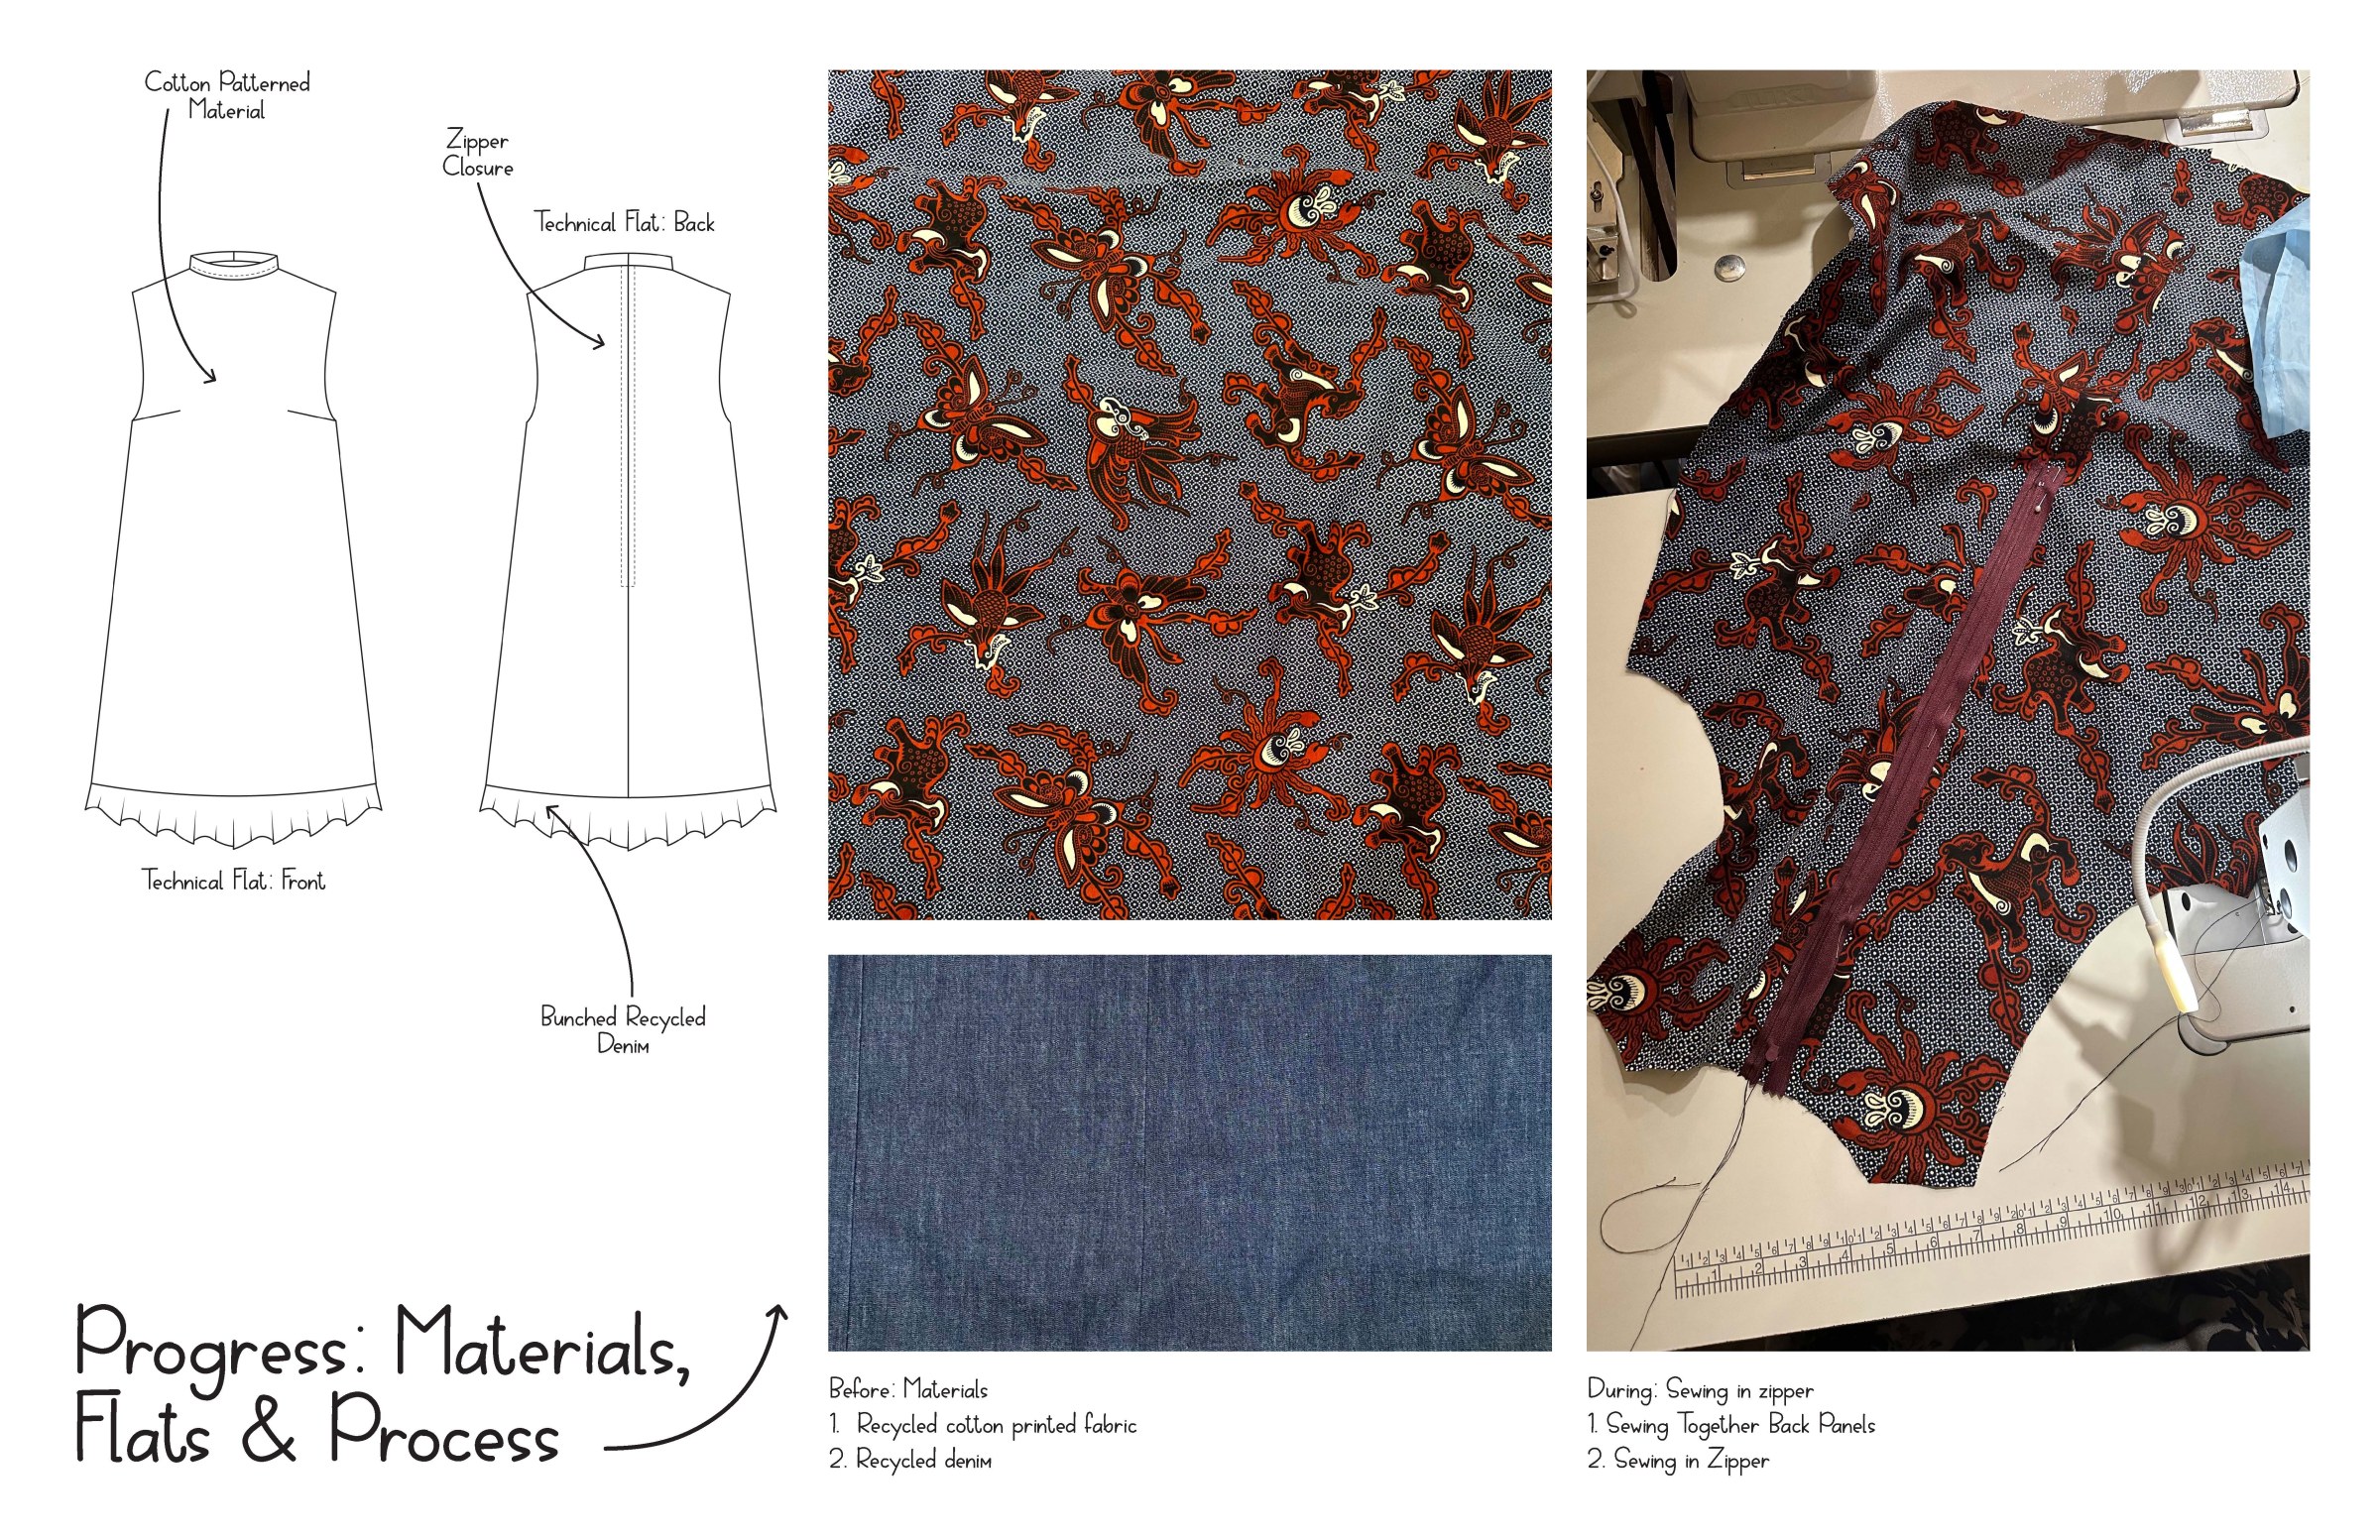 Textile Design Studio student's design progress -- sketches to cloth